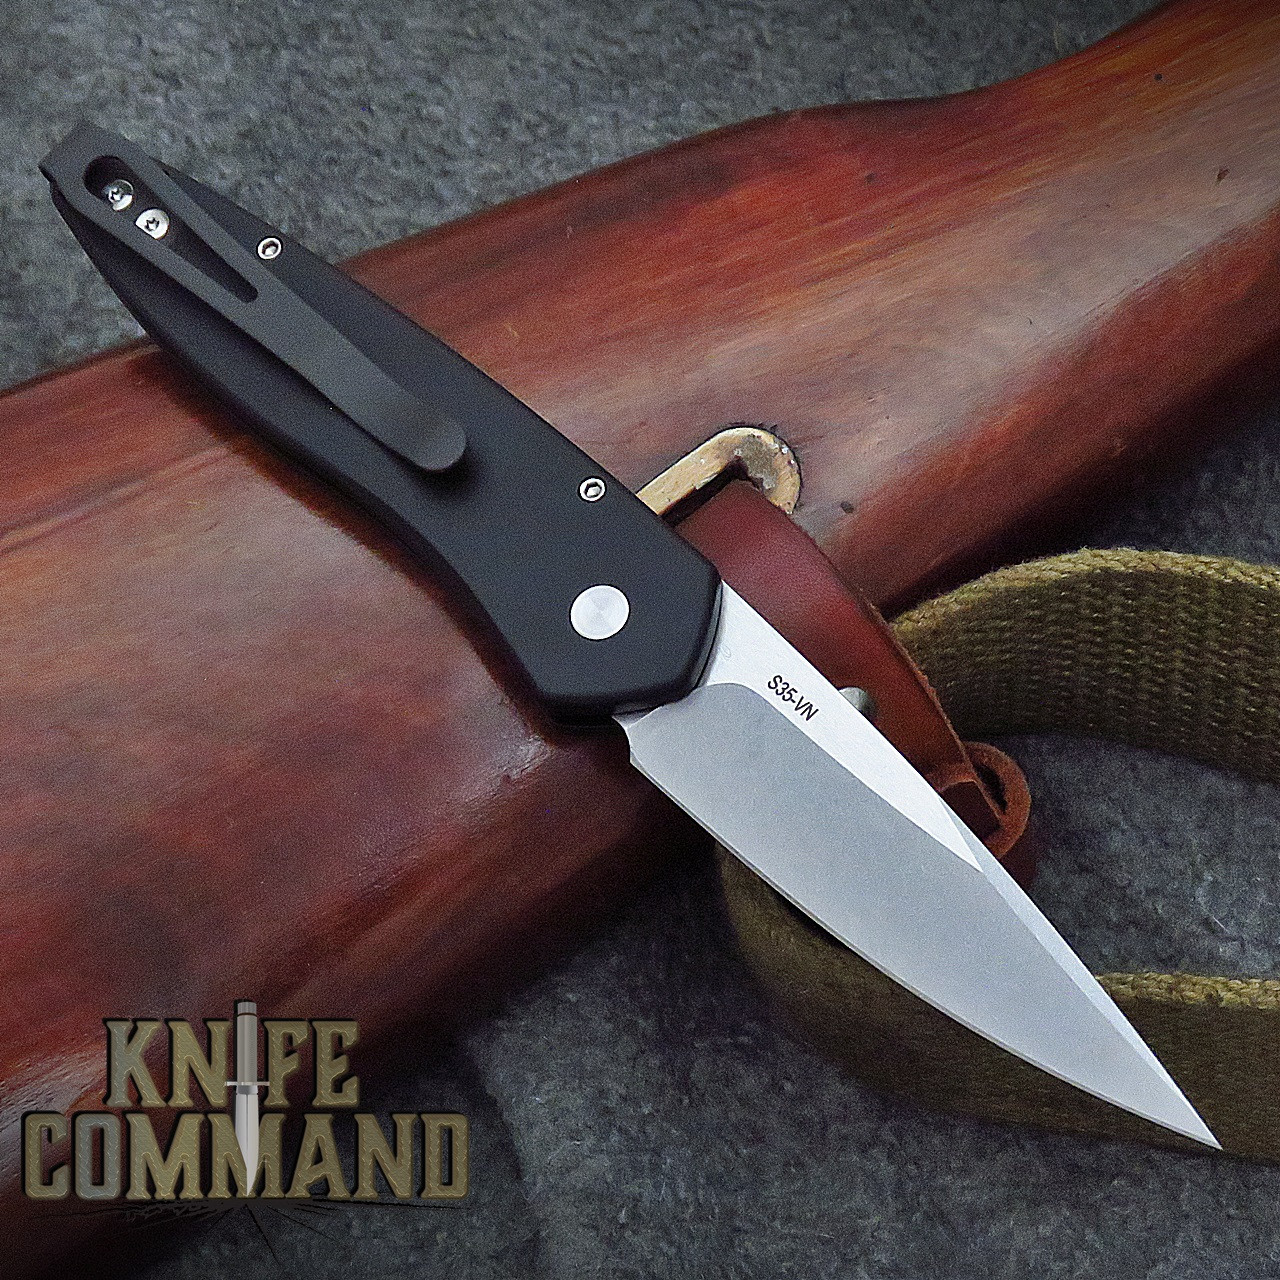 Pro-Tech Knives 3405 Newport Automatic Knife Folder 3" Stonewash CPM-S35VN Blade